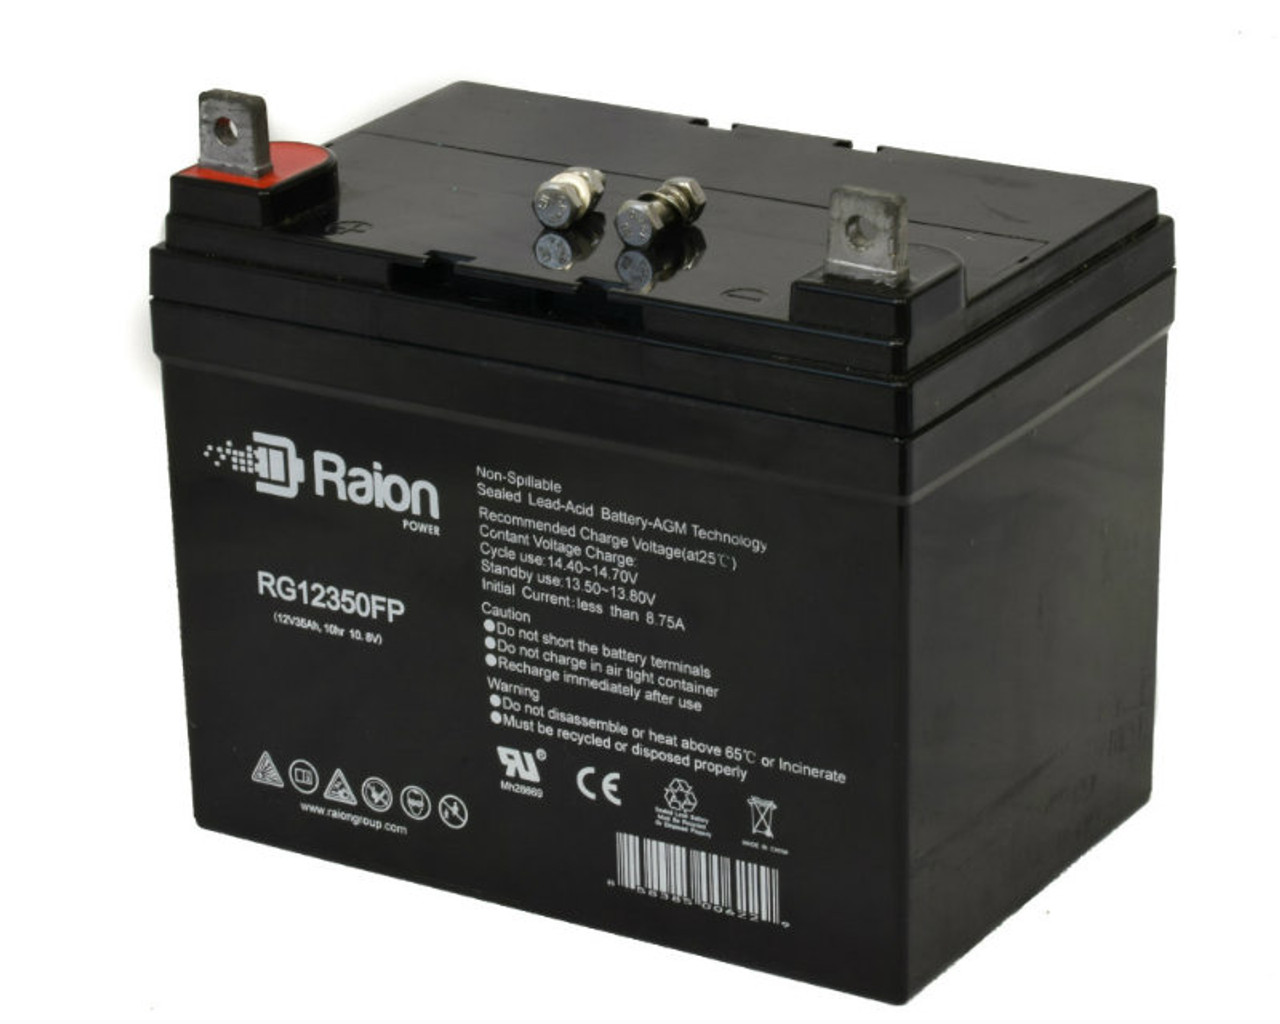 Raion Power Replacement 12V 35Ah RG12350FP Battery for Bolens 13AO683G163